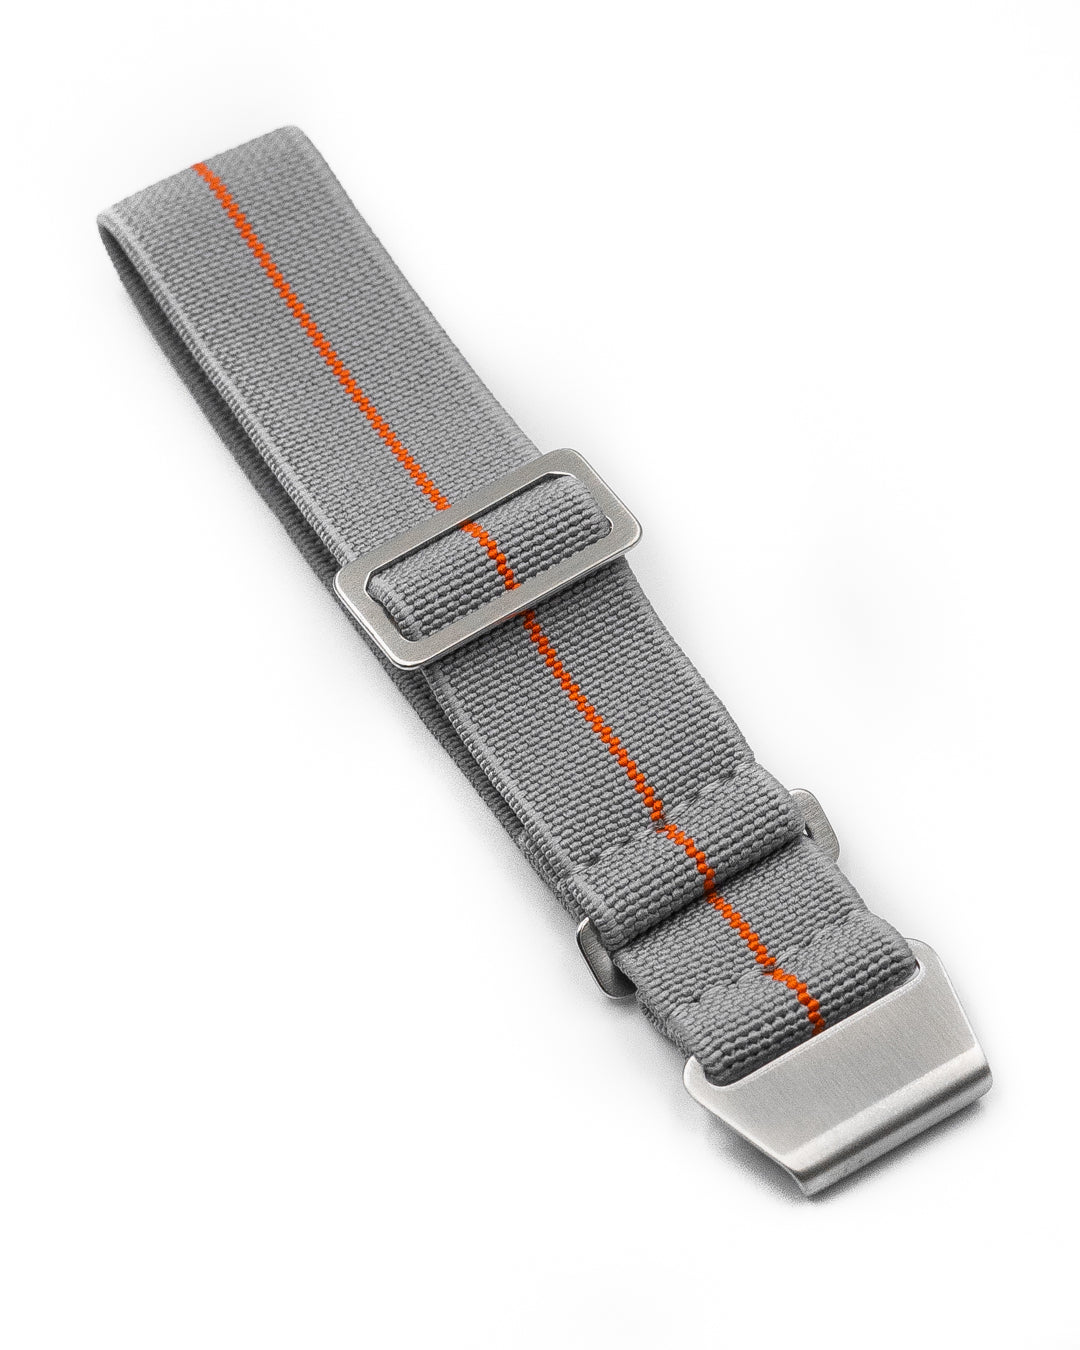 PARA Elastic - Grey with Orange Centerline